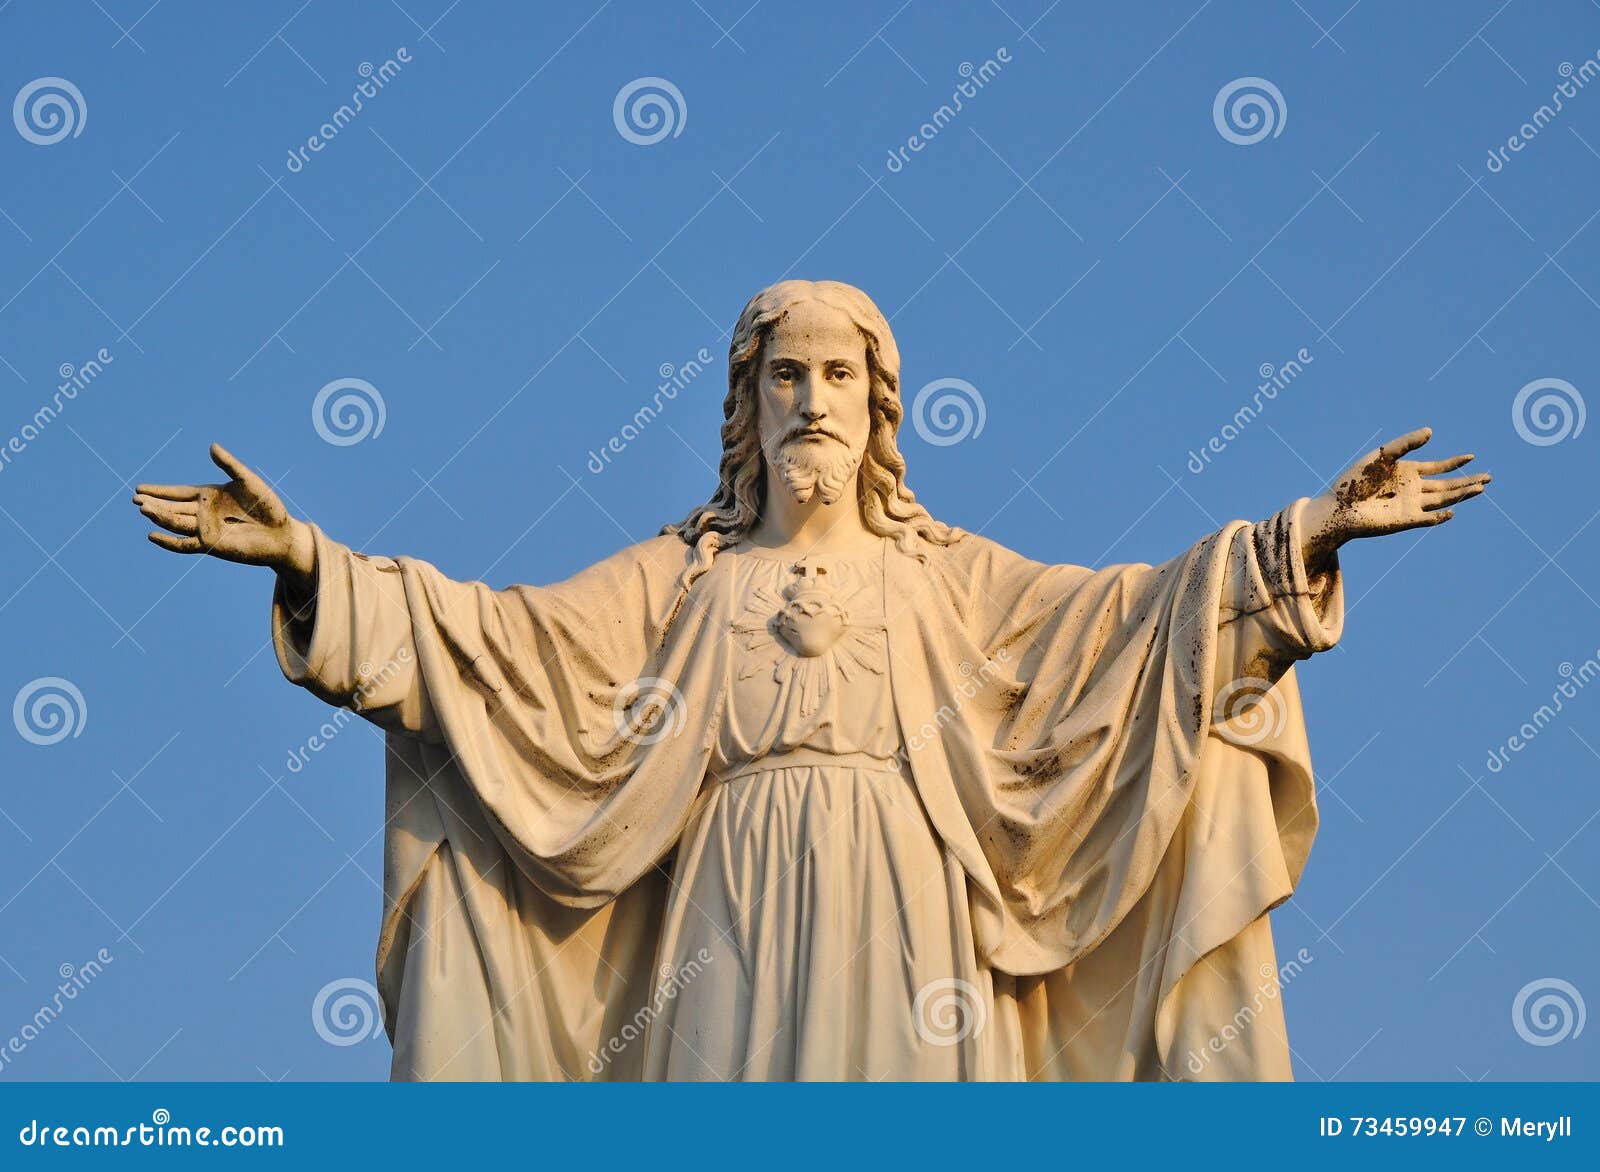 Jesus Christ stock image. Image of christ, blue, christian - 73459947